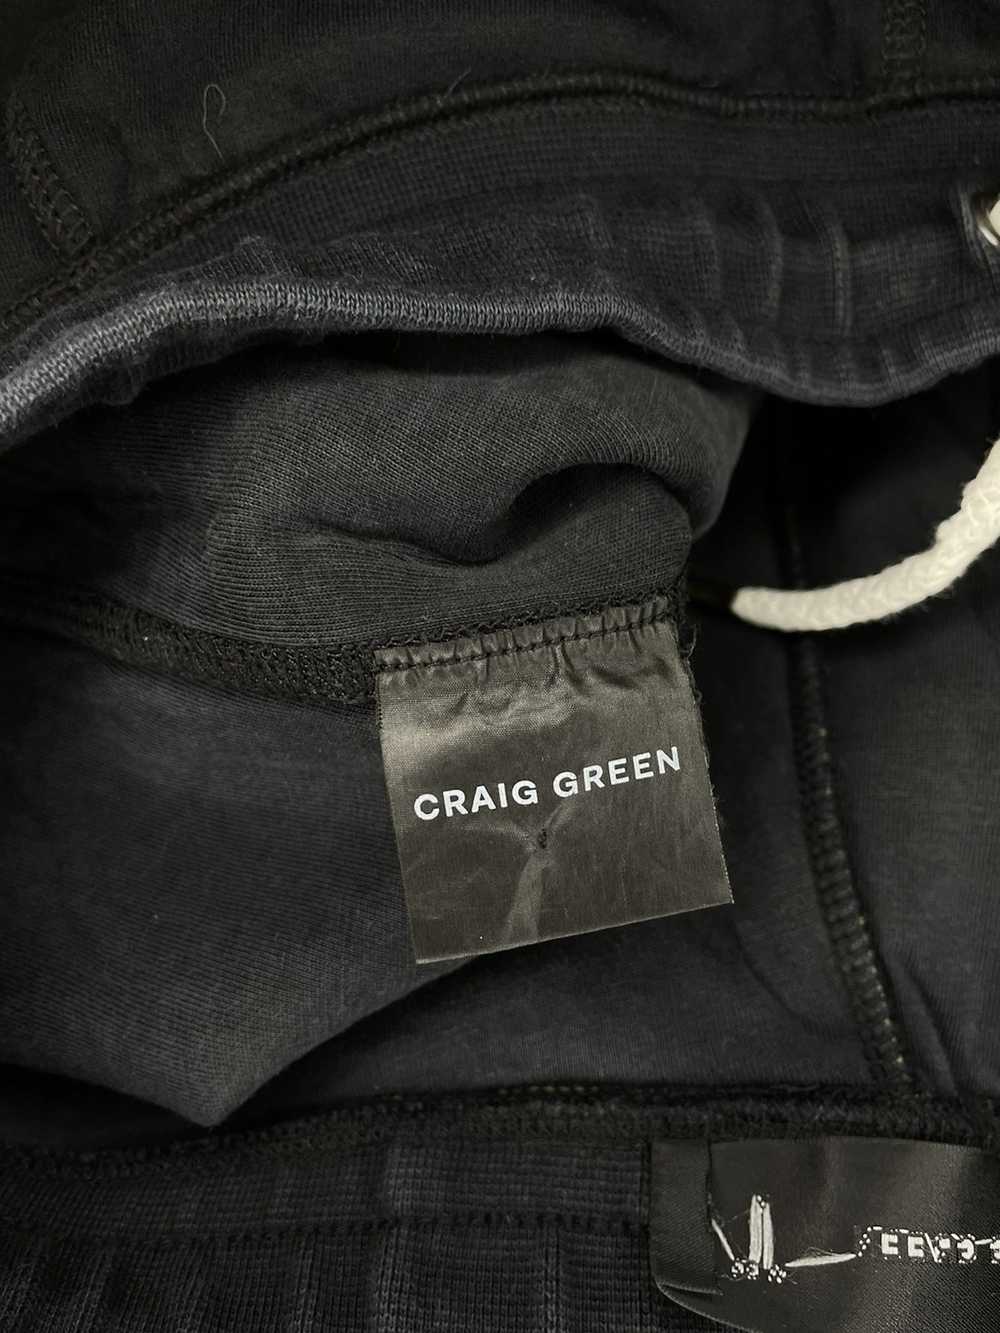 Craig Green Craig Green Sweatpants - image 9